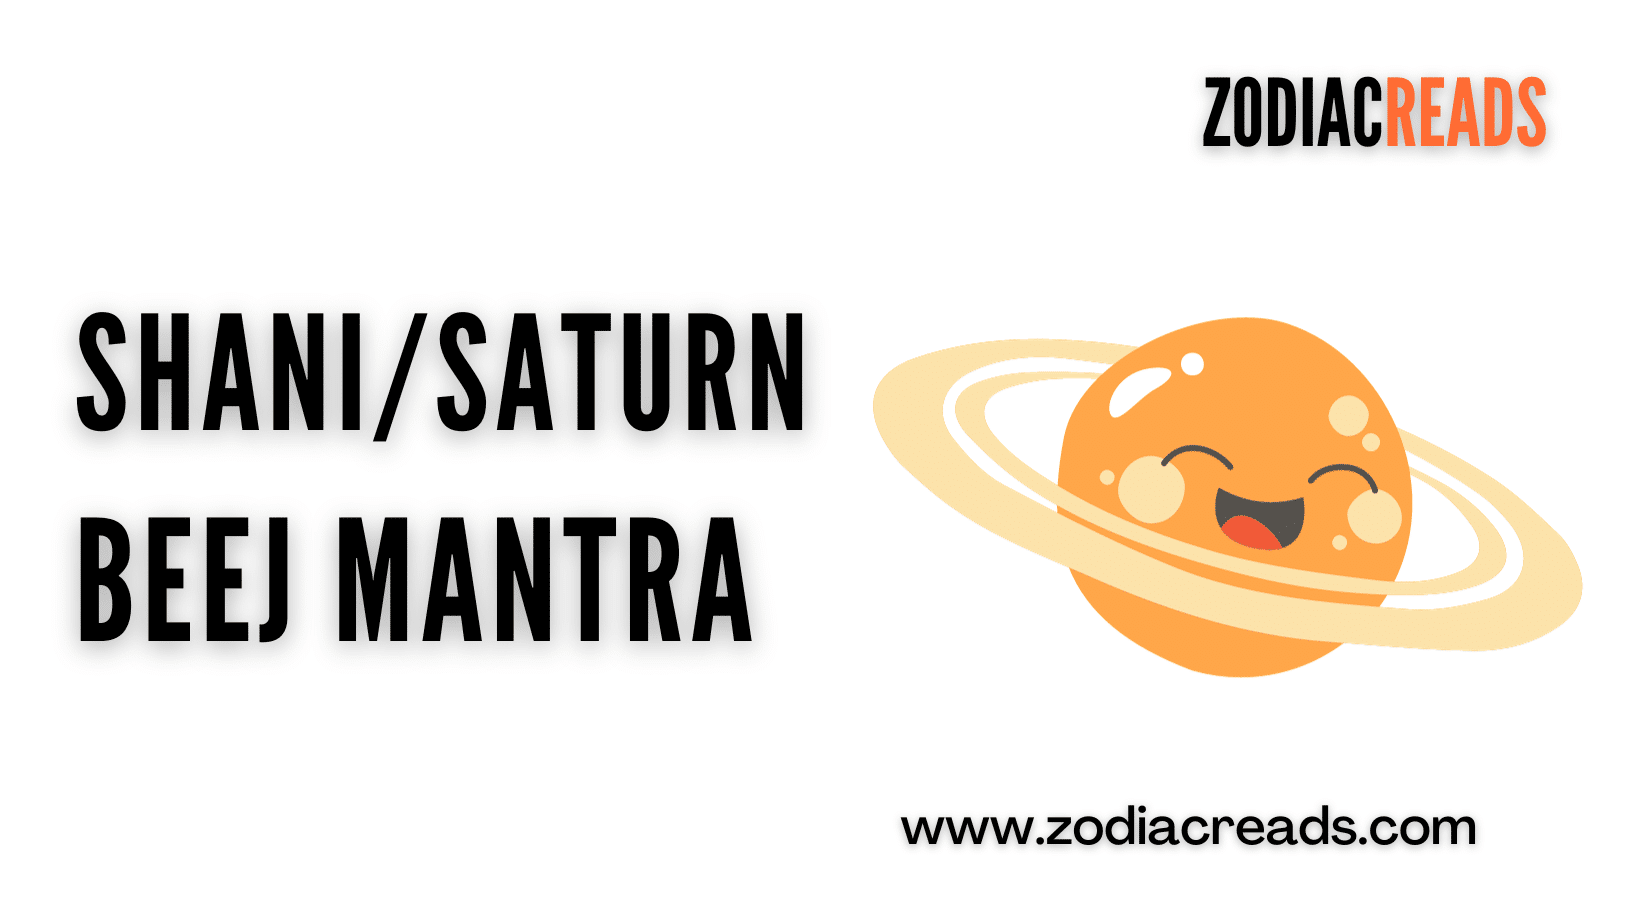 Saturn Beej Mantra